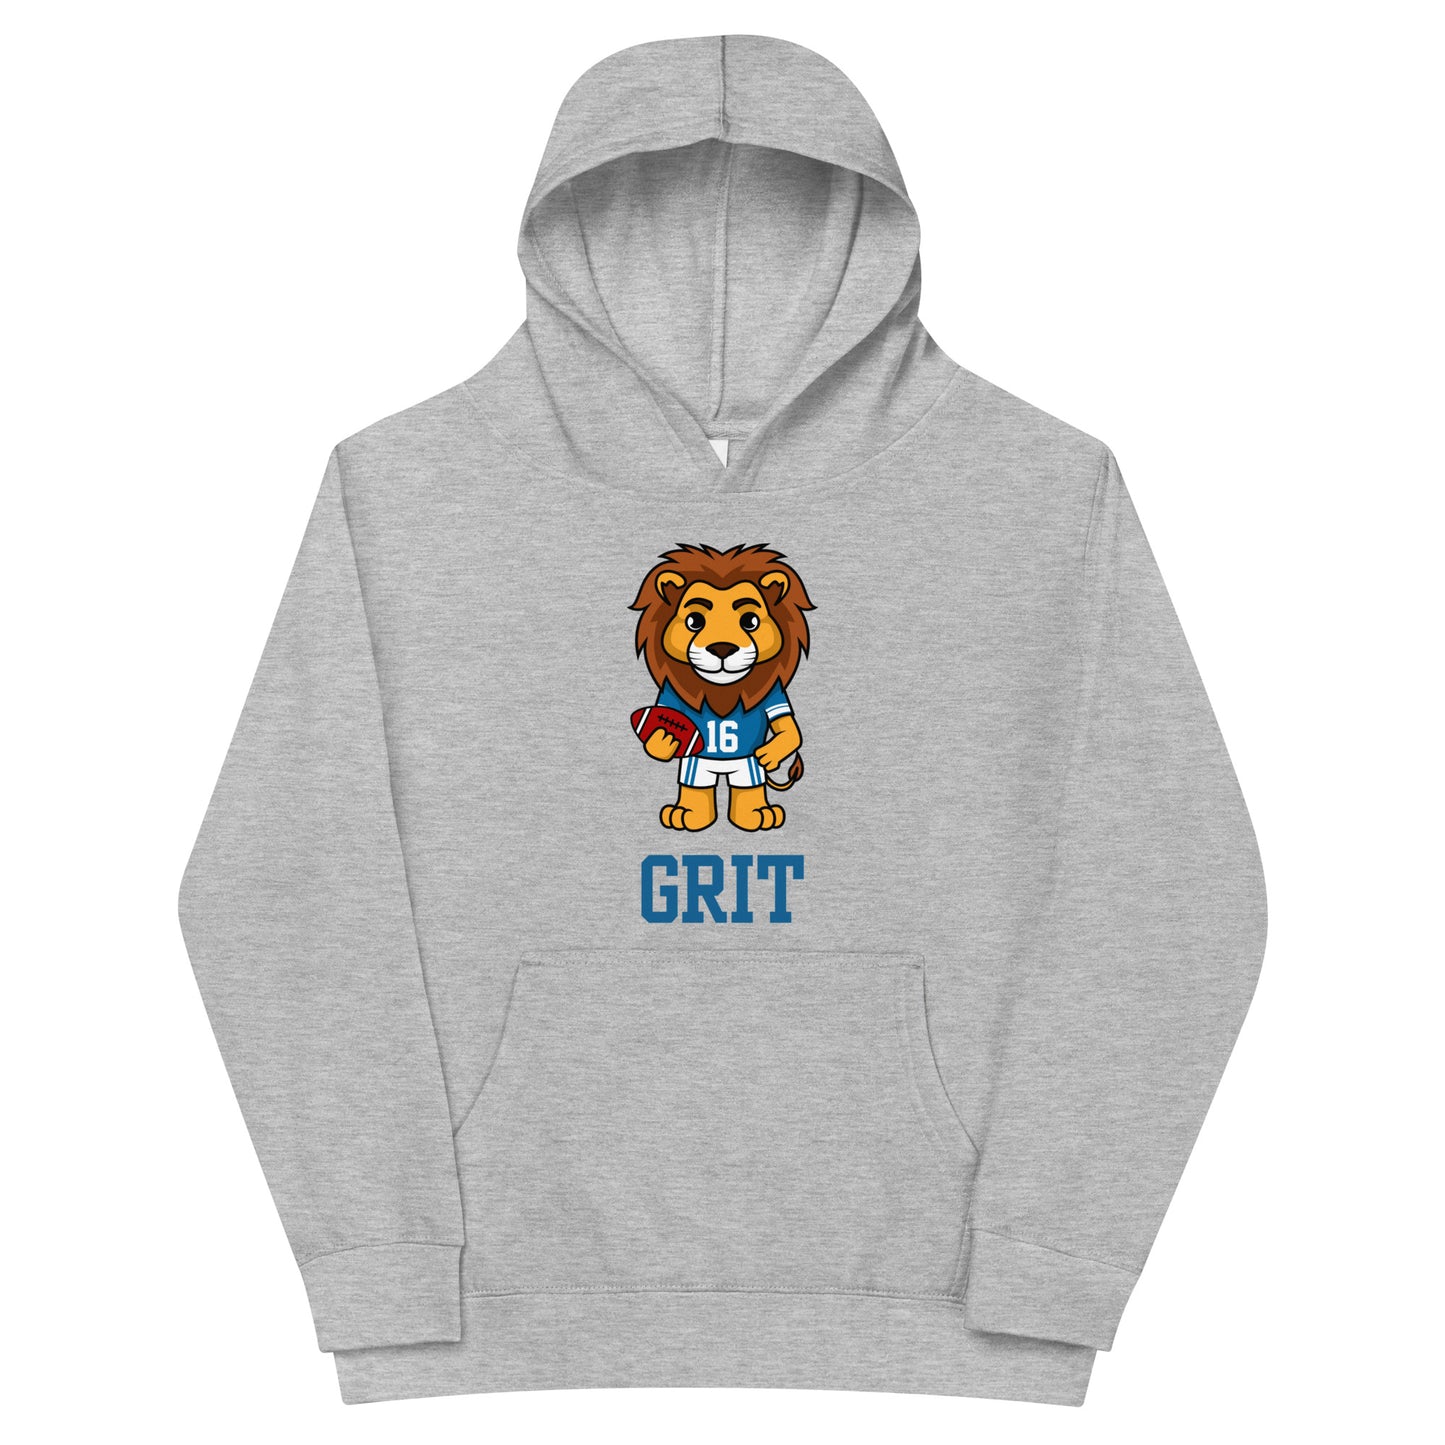 Grit Kids fleece hoodie